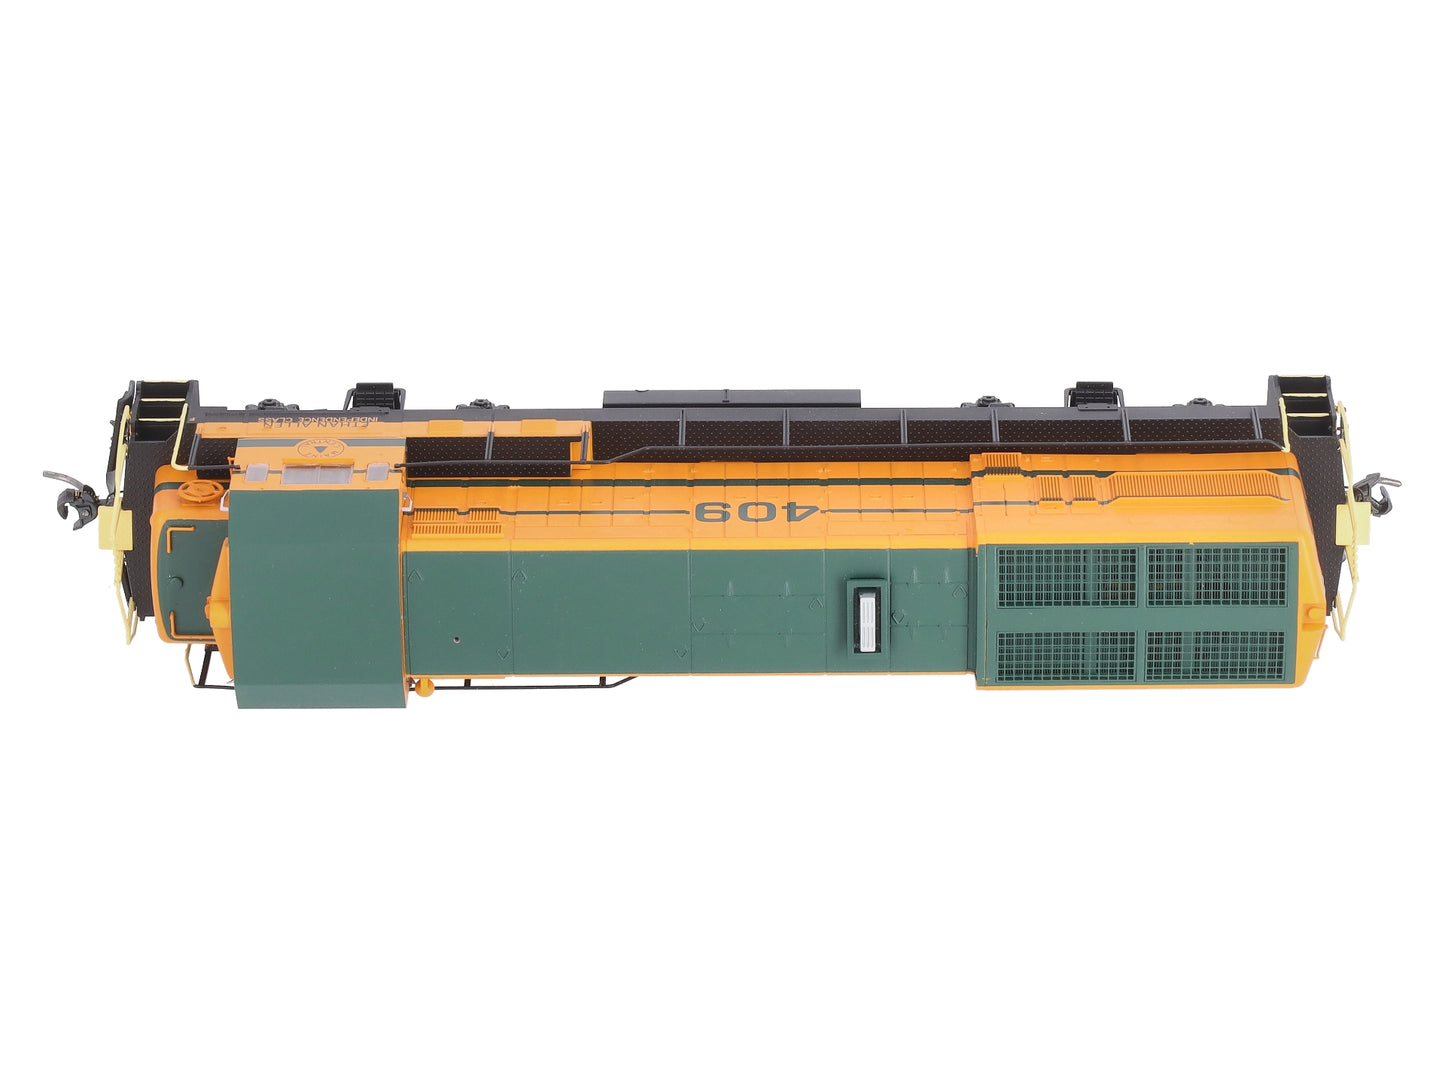 InterMountain 49451-04 HO Scale Maine Central Eagle U18B Locomotive #409 LN/Box